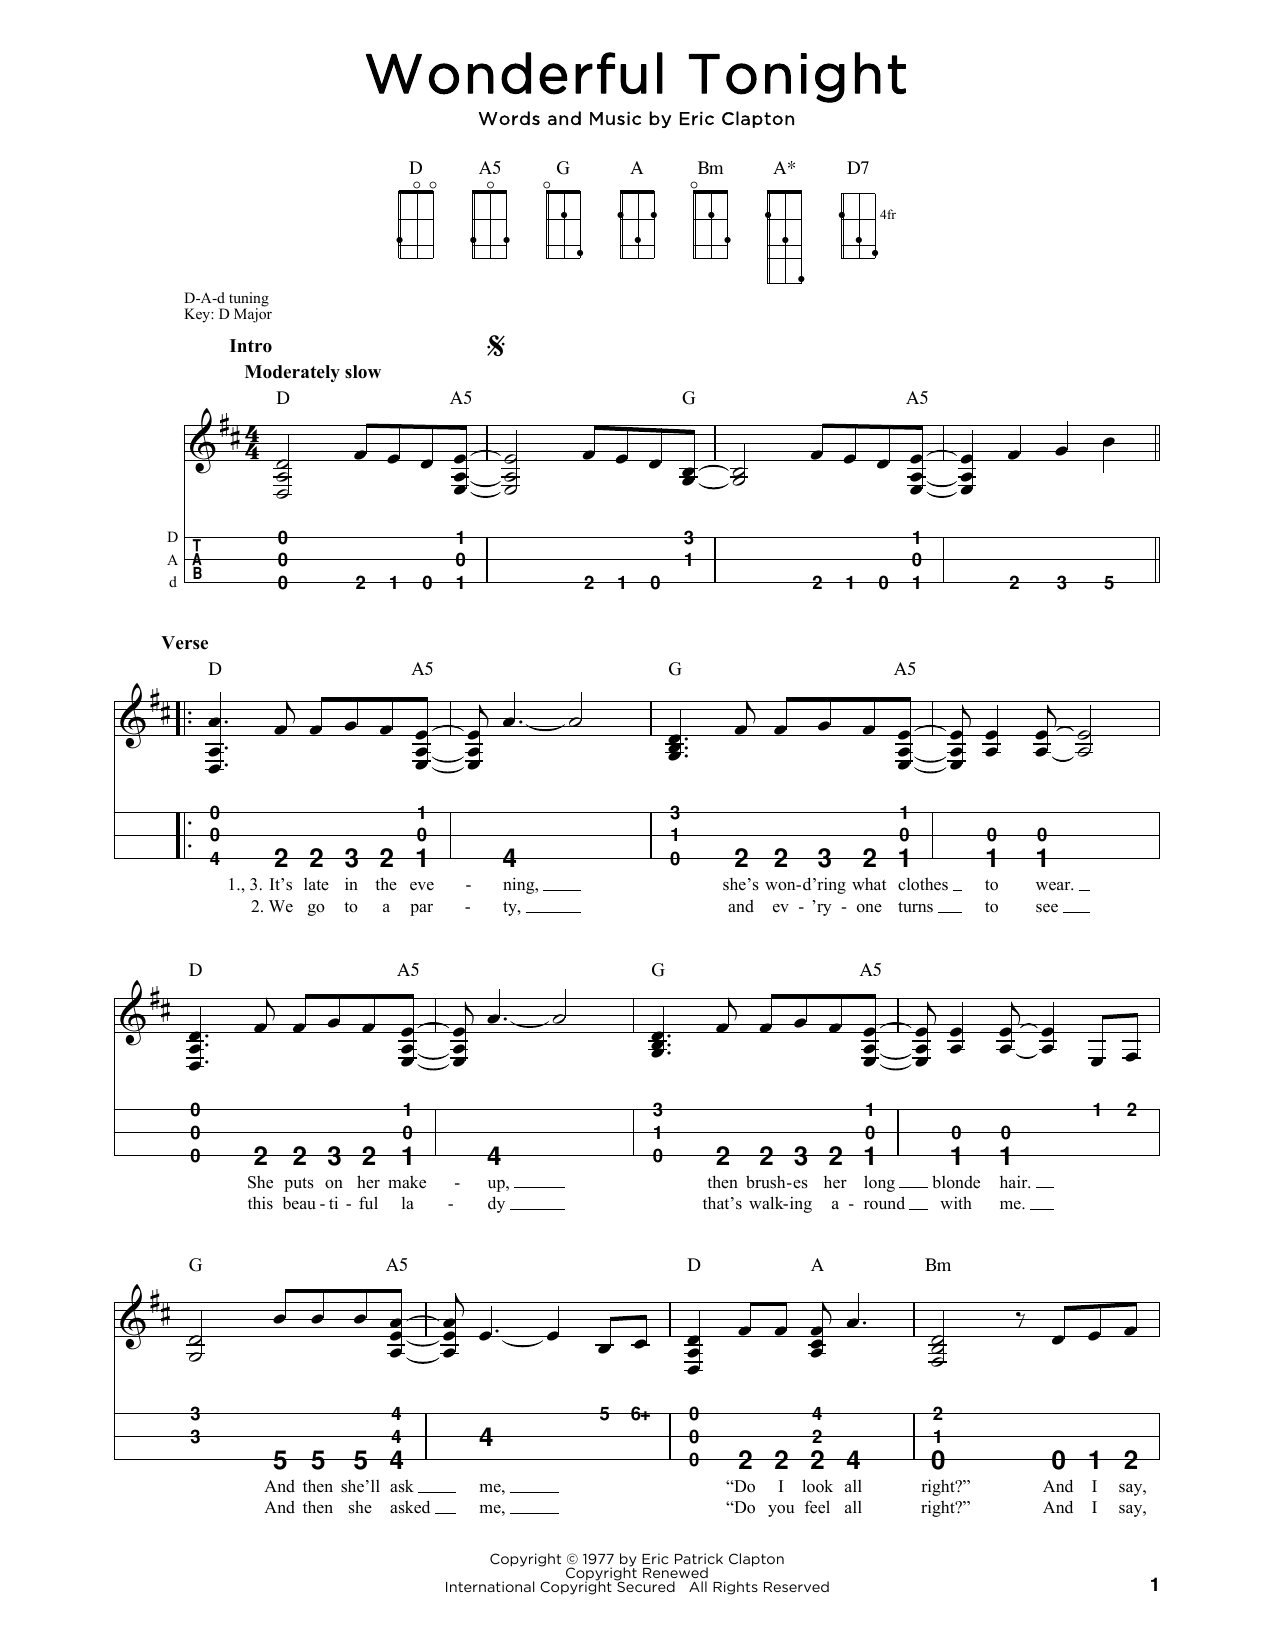 Eric Clapton Wonderful Tonight (arr. Steven B. Eulberg) Sheet Music Notes & Chords for Dulcimer - Download or Print PDF